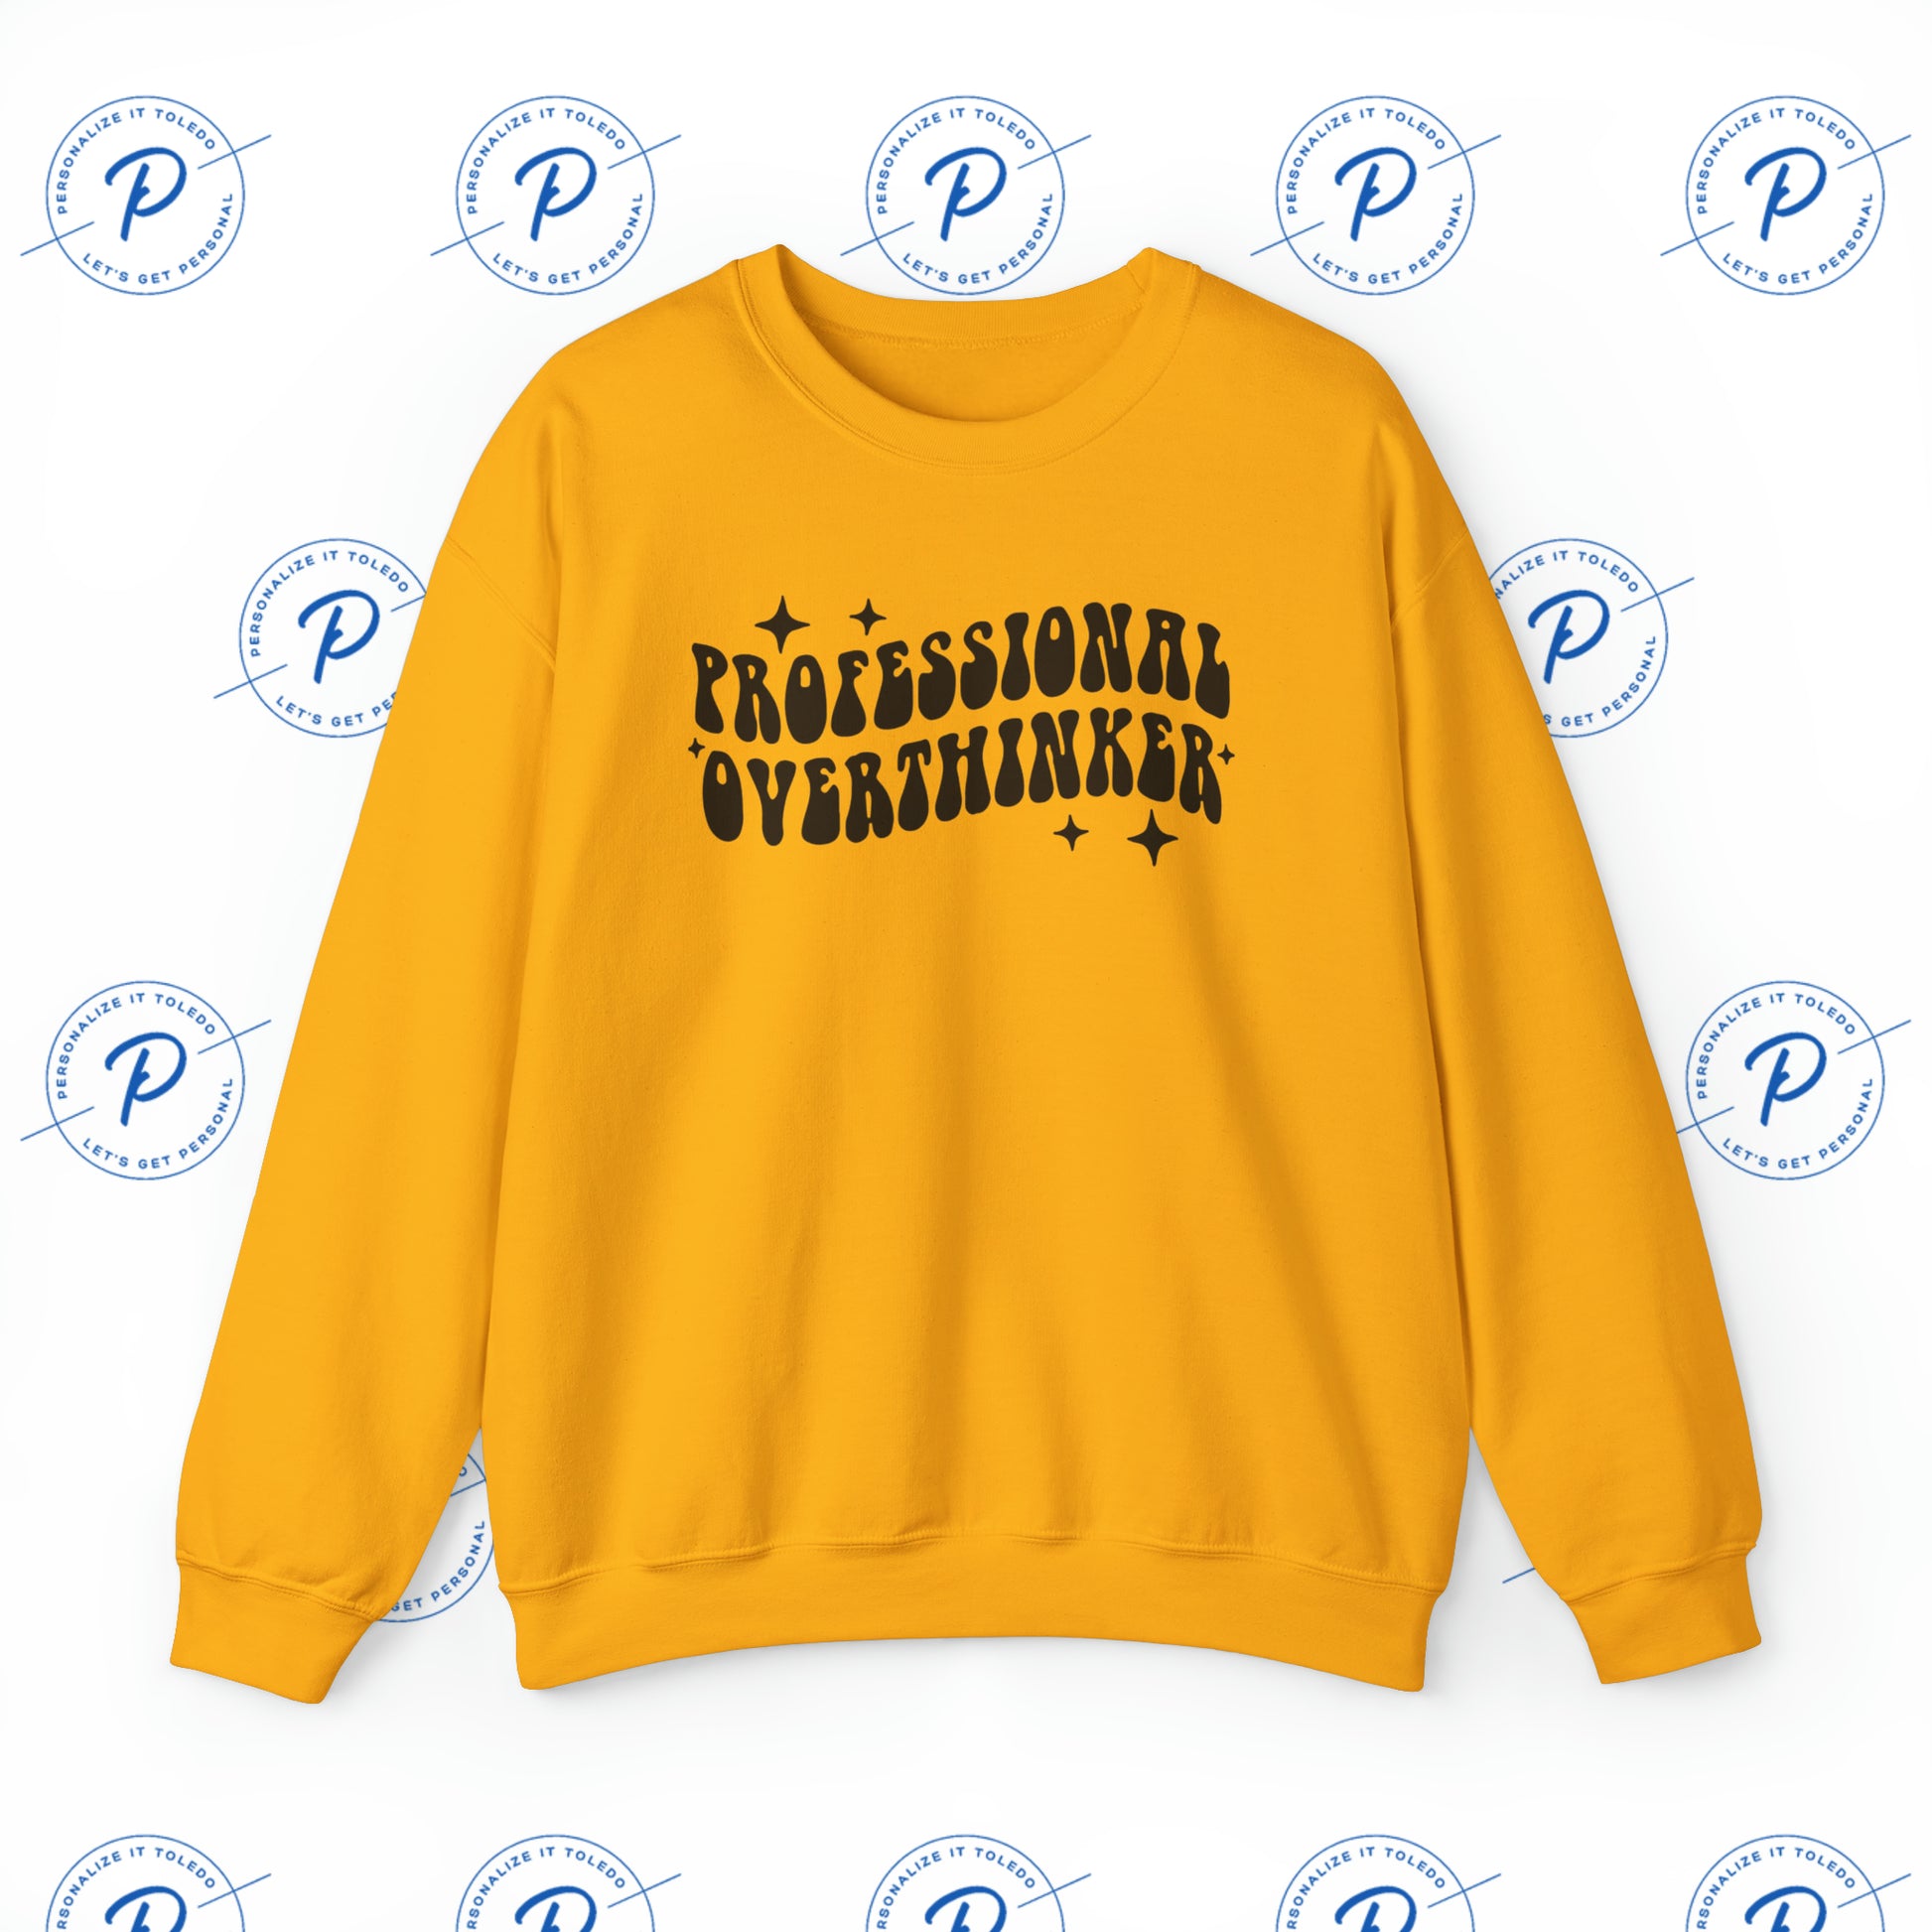 Professional Overthinker Sweatshirt - Ponder Pro Cozy Blend Sweatshirt - Funny Ladies Sweatshirt